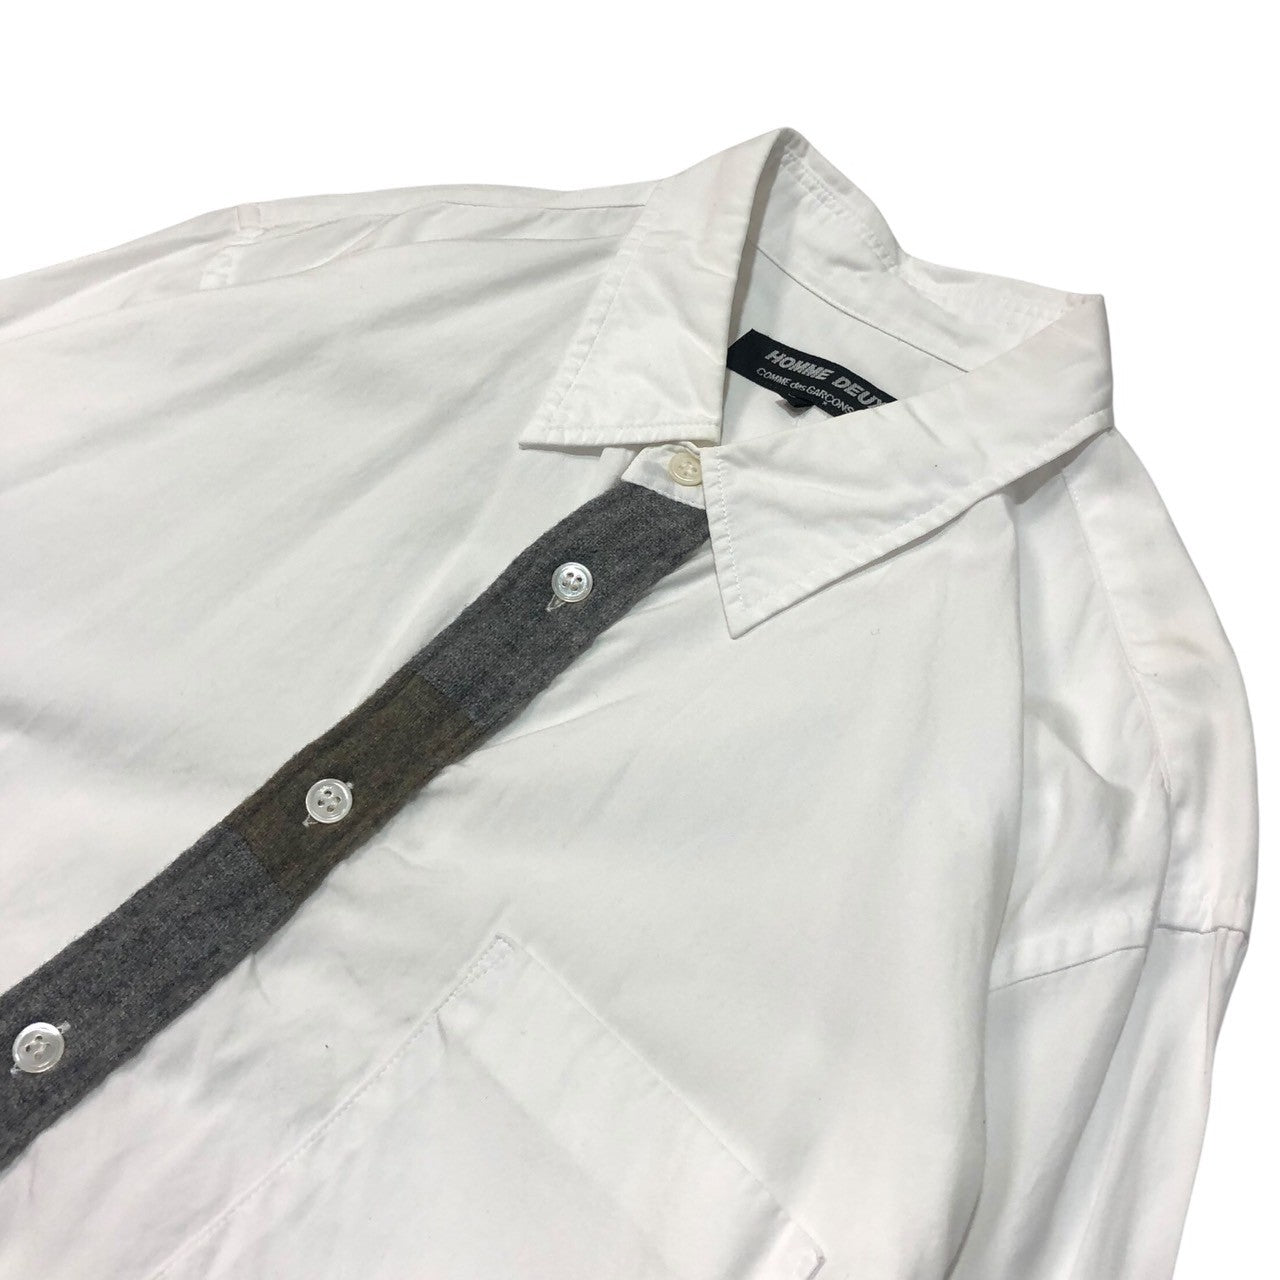 COMME des GARCONS HOMME DEUX(コムデギャルソンオムドゥ) 16SS  center wool shirt センターウールシャツ DQ-B059 S ホワイト AD2015